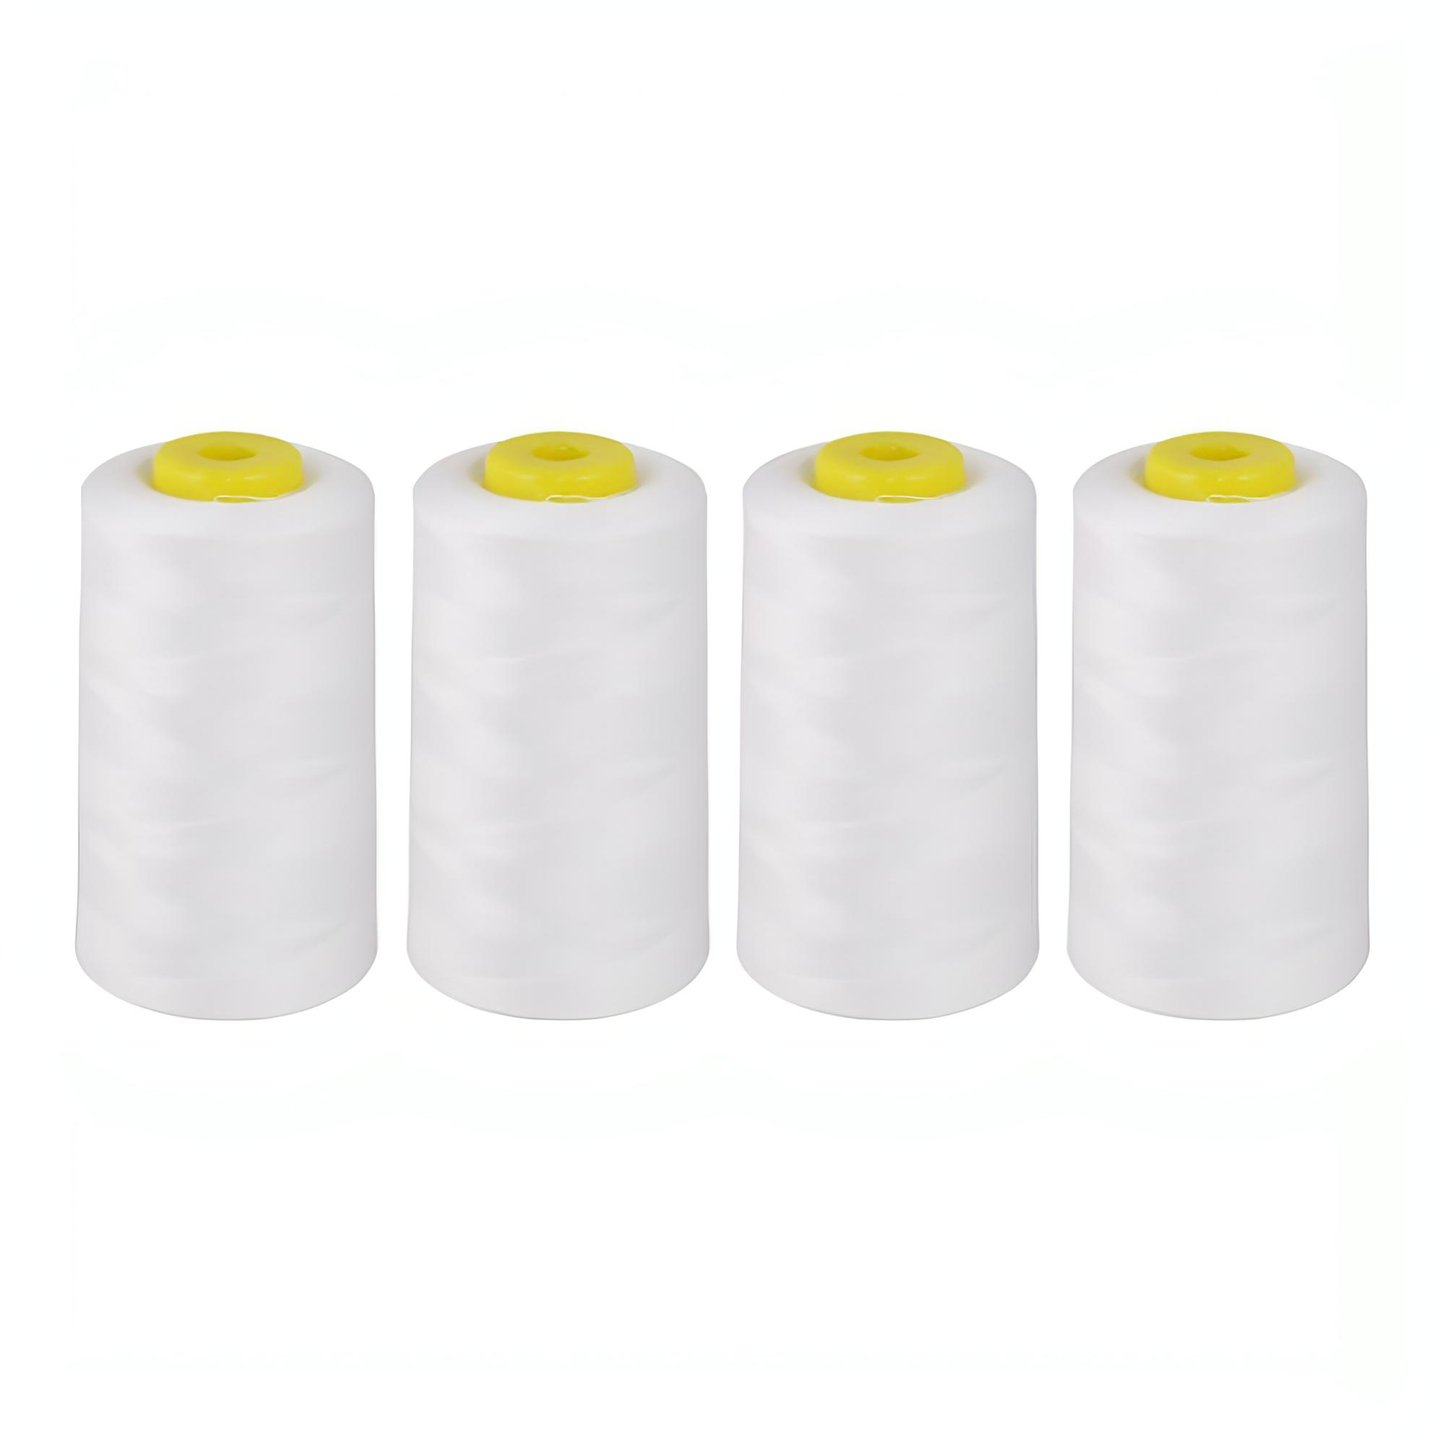 Pack of 4 x Overlocker Thread Cone 5000m Extra Large - White - Designed for Overlockers